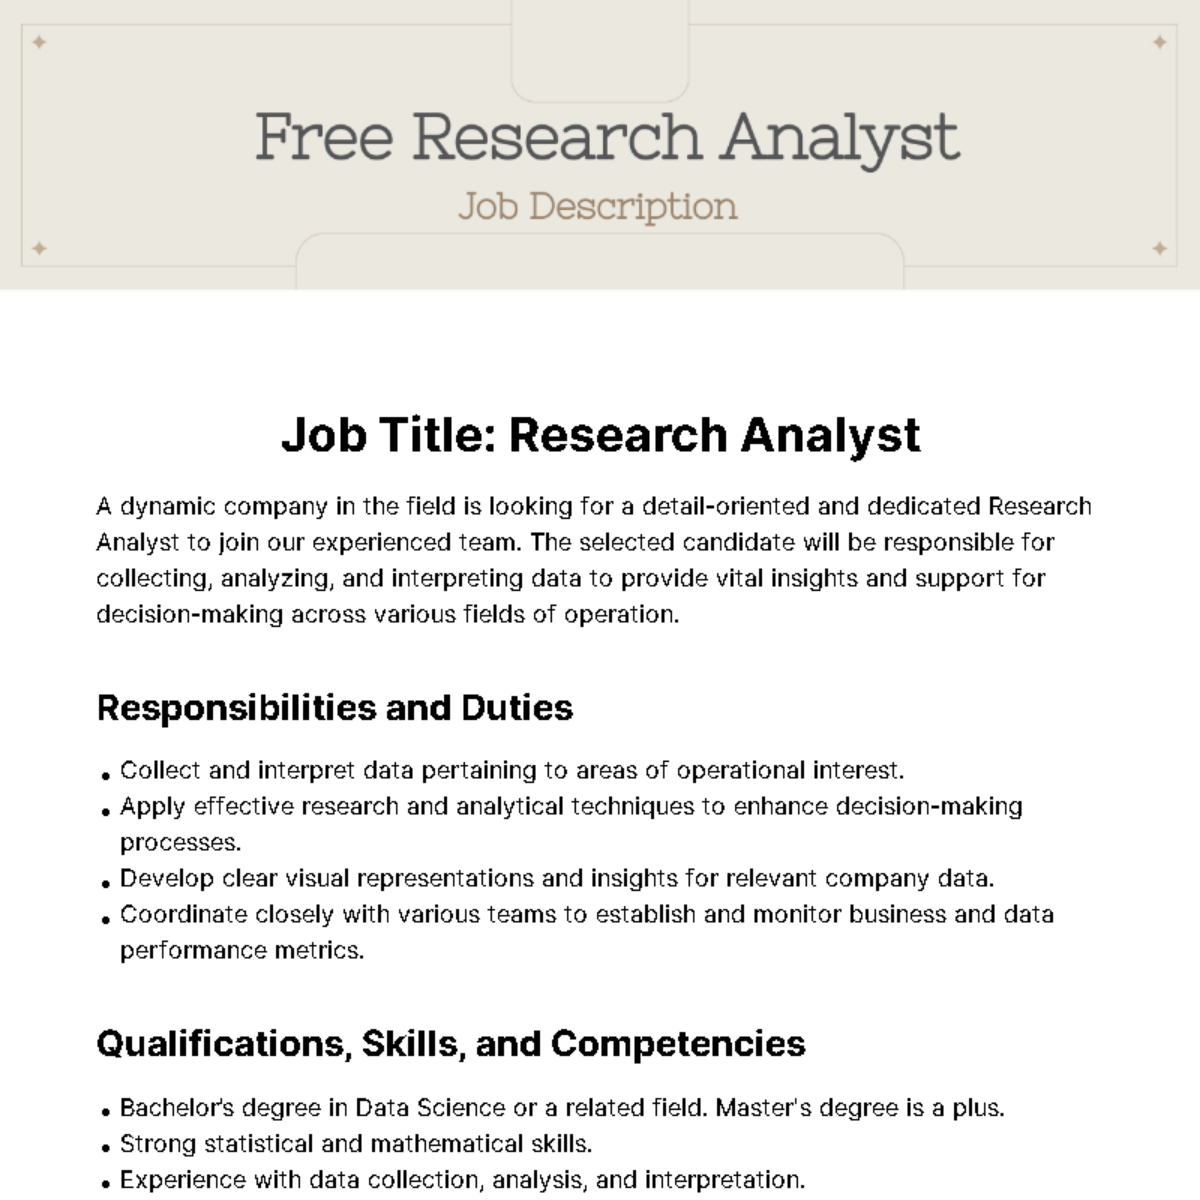 Research Analyst Job Description Template